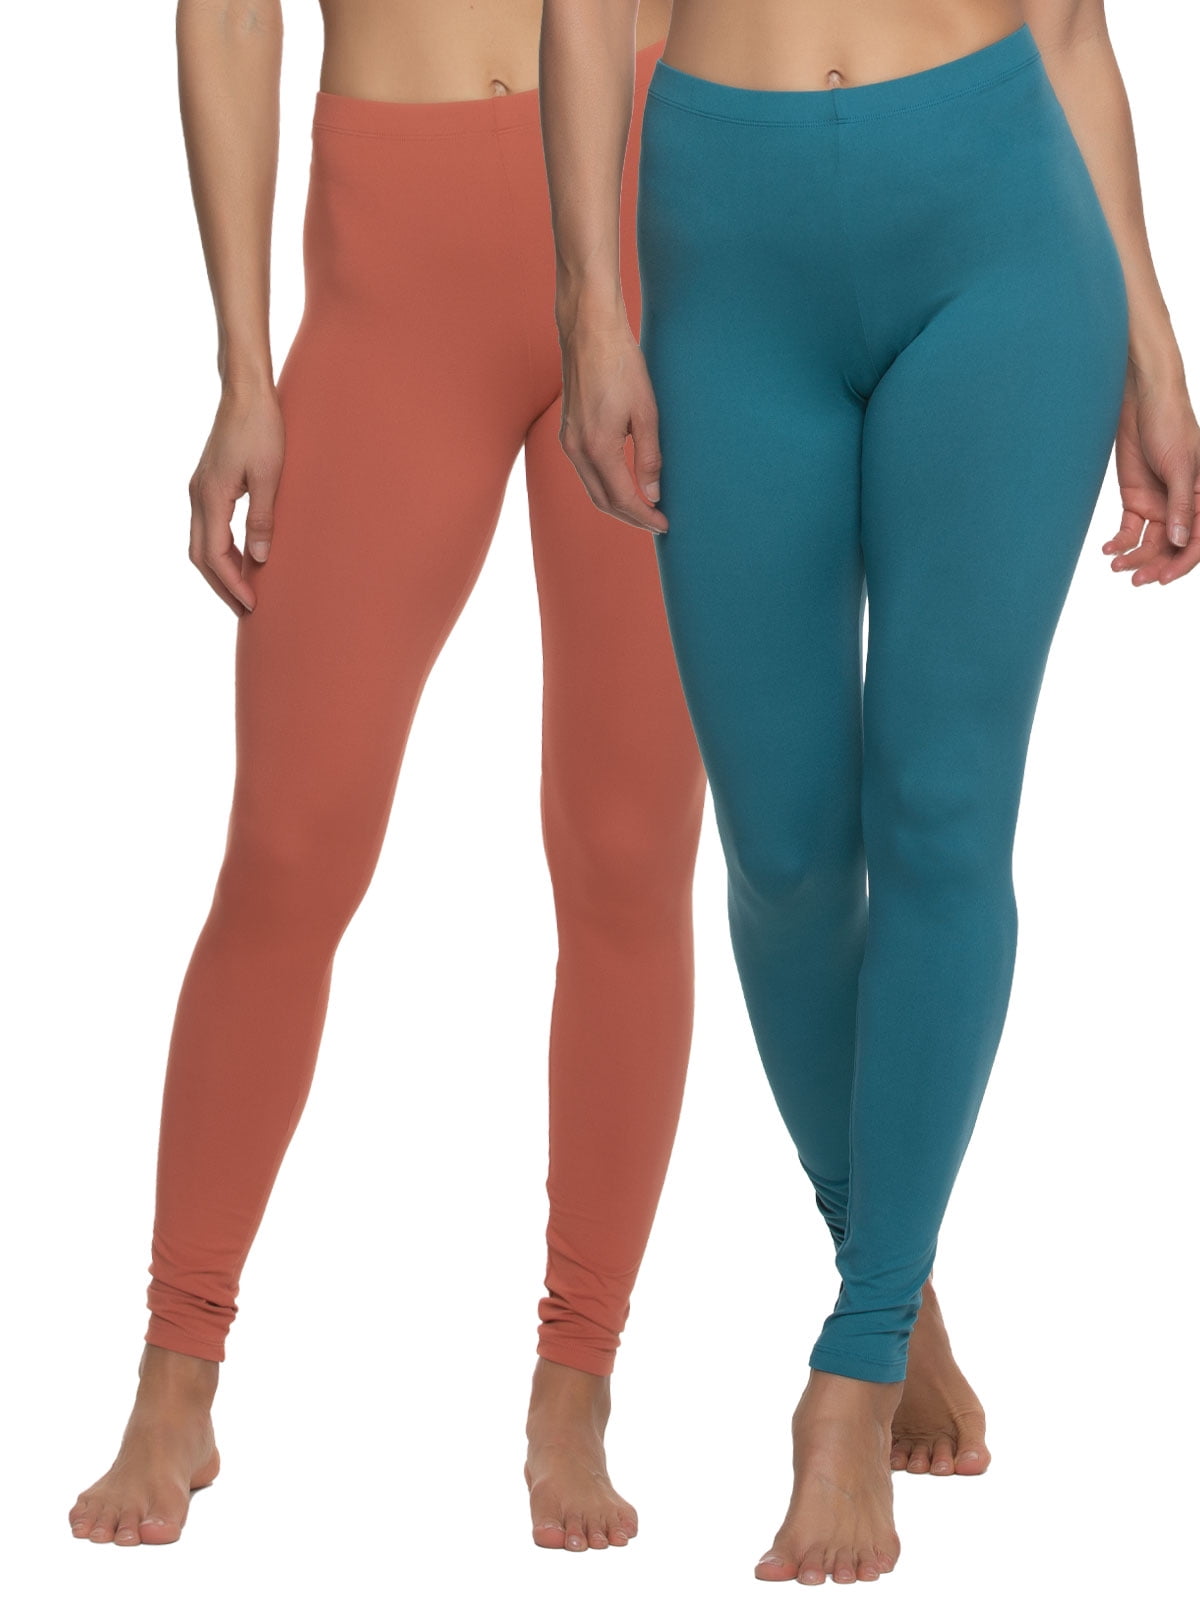 Felina Velvety Super Soft Lightweight Leggings 2-Pack - For Women - Yoga  Pants, Workout Clothes (Warm Beach, Medium)